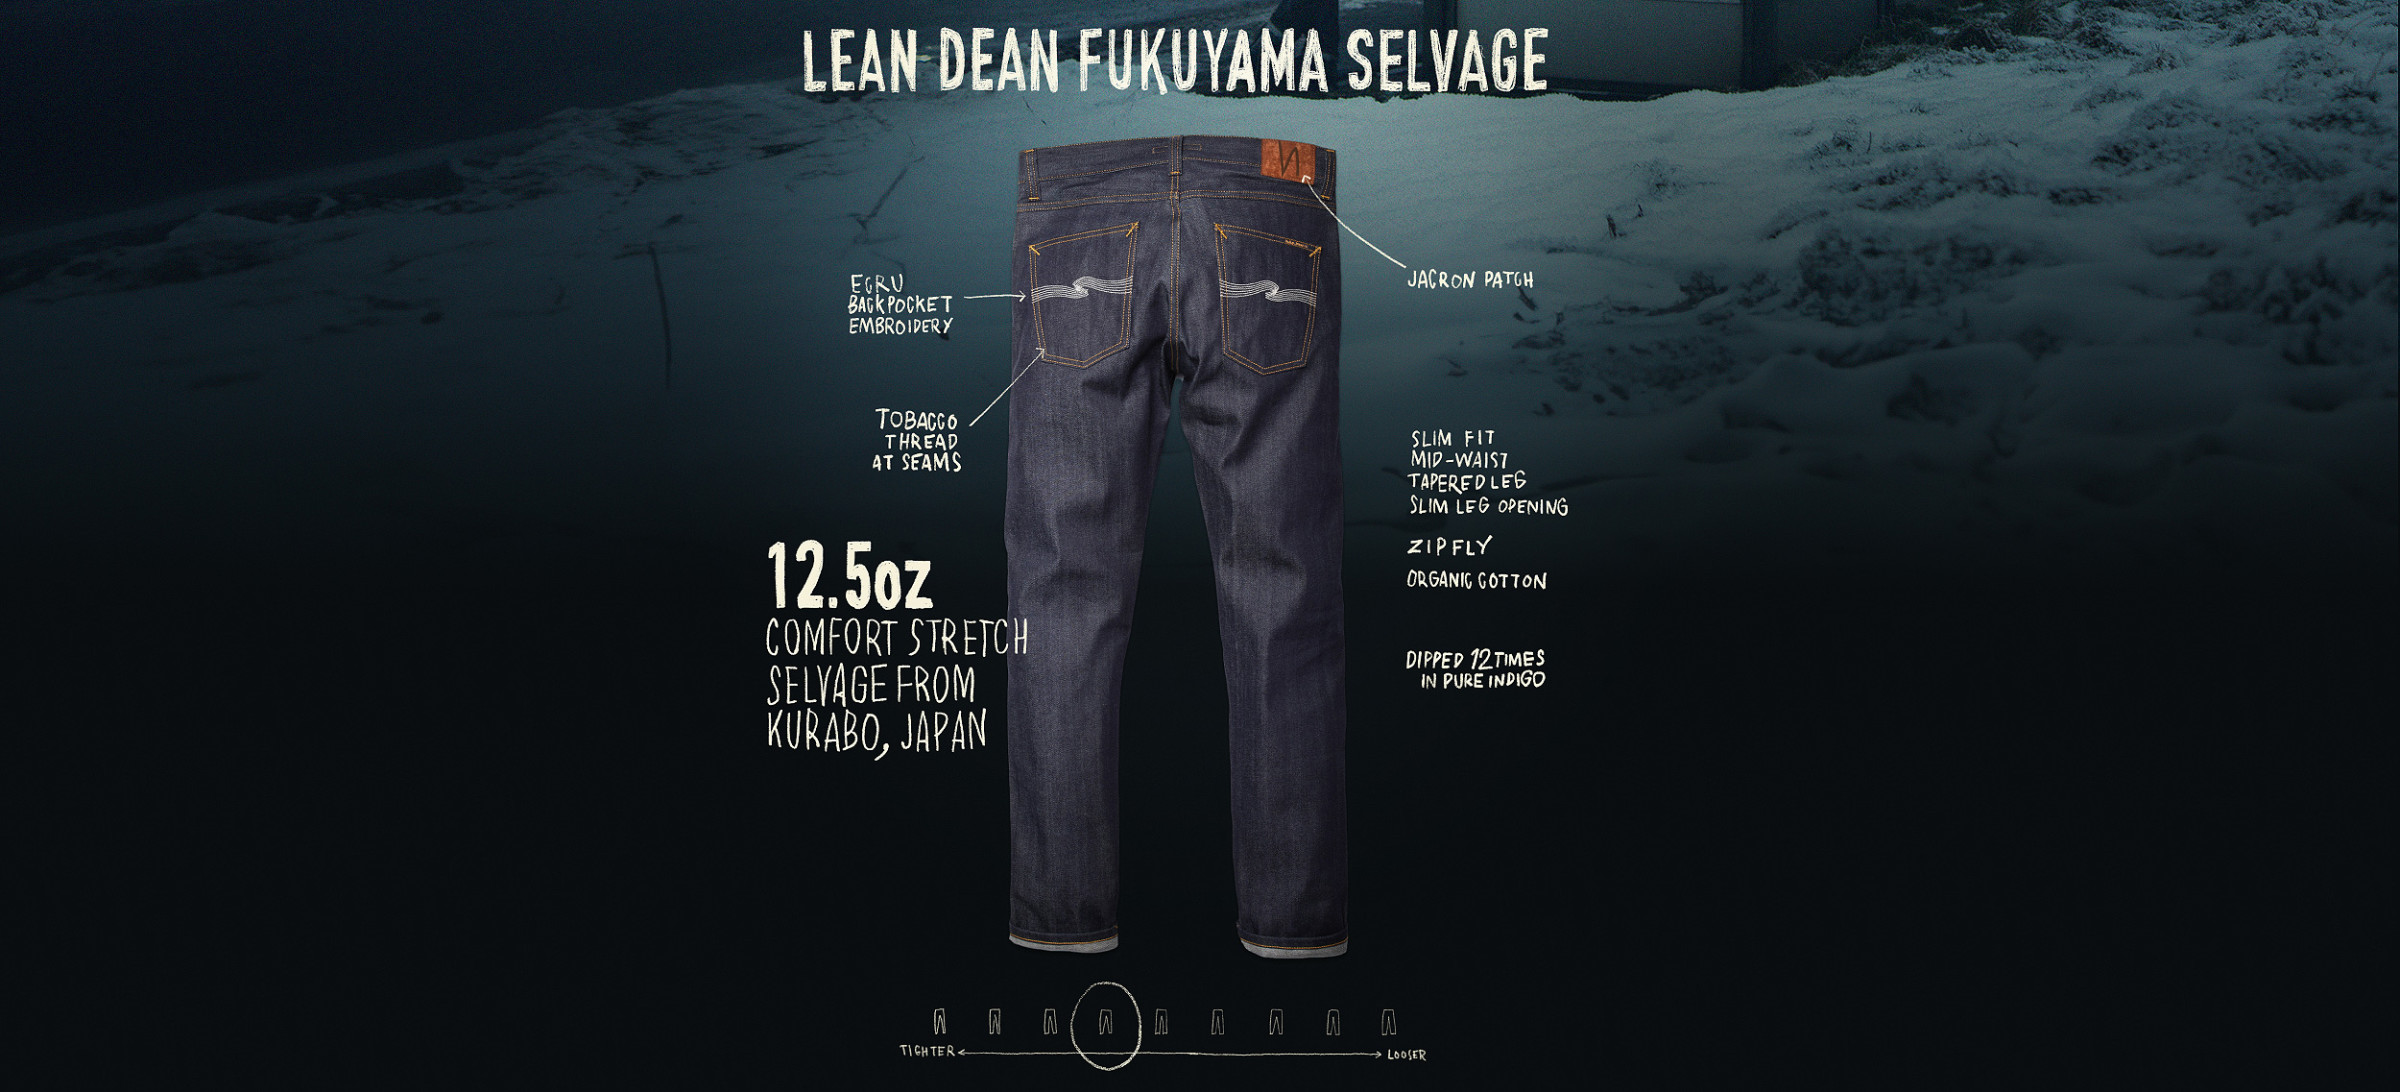 Lean Dean Fukuyama Selvage